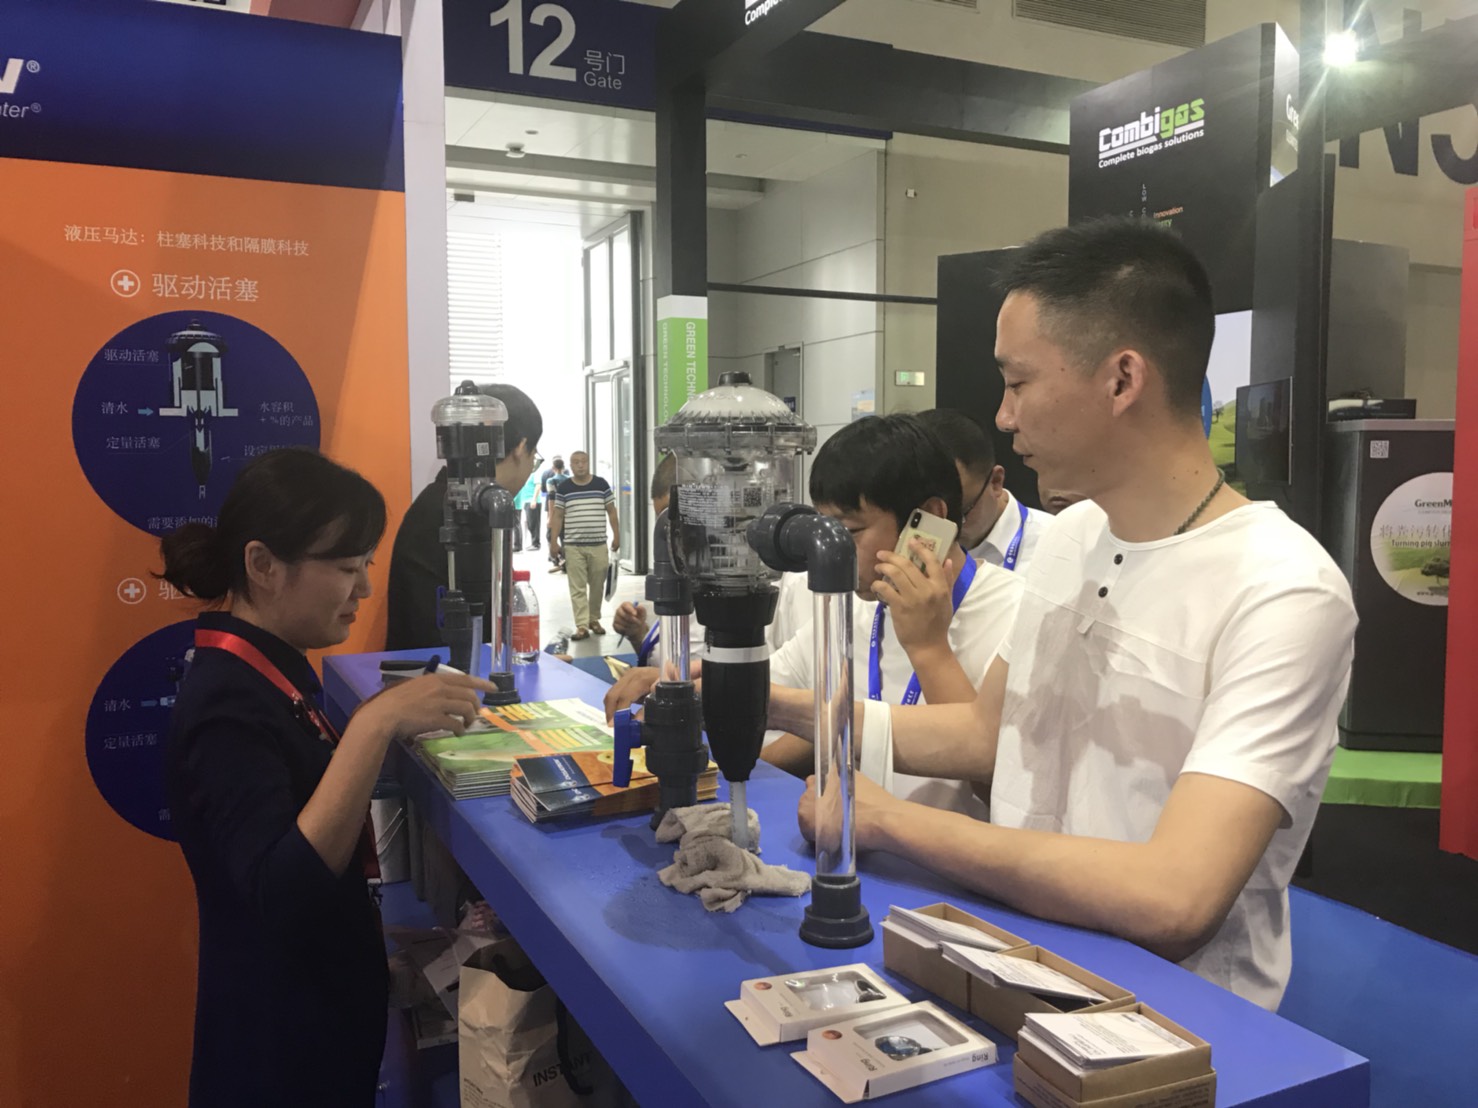 China International Animal Husbandry Expo 2018